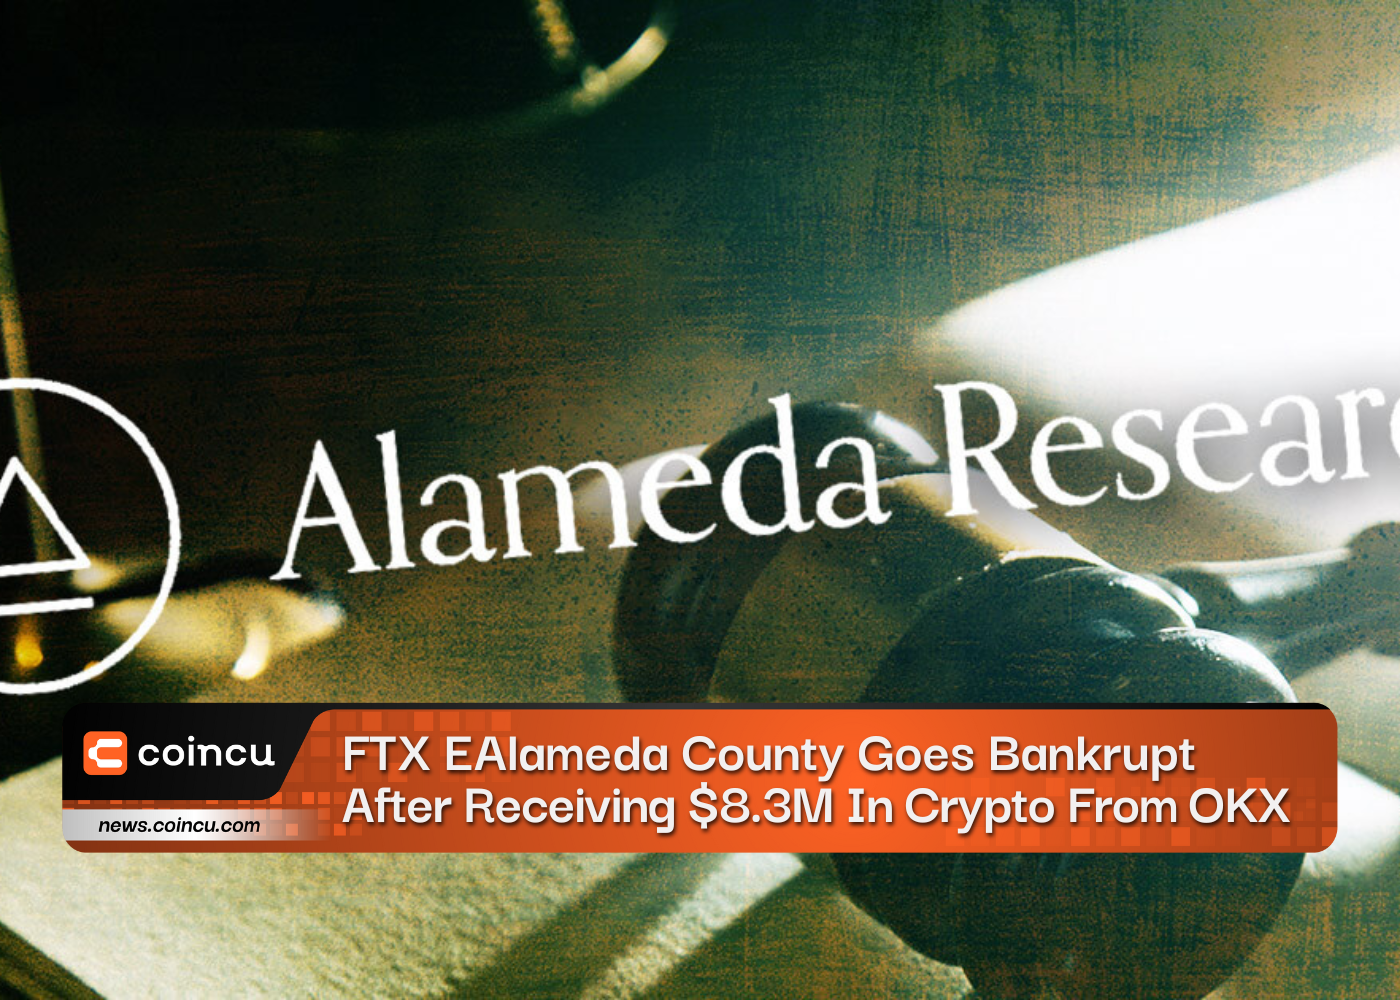 FTX EAlameda County Goes Bankrupt